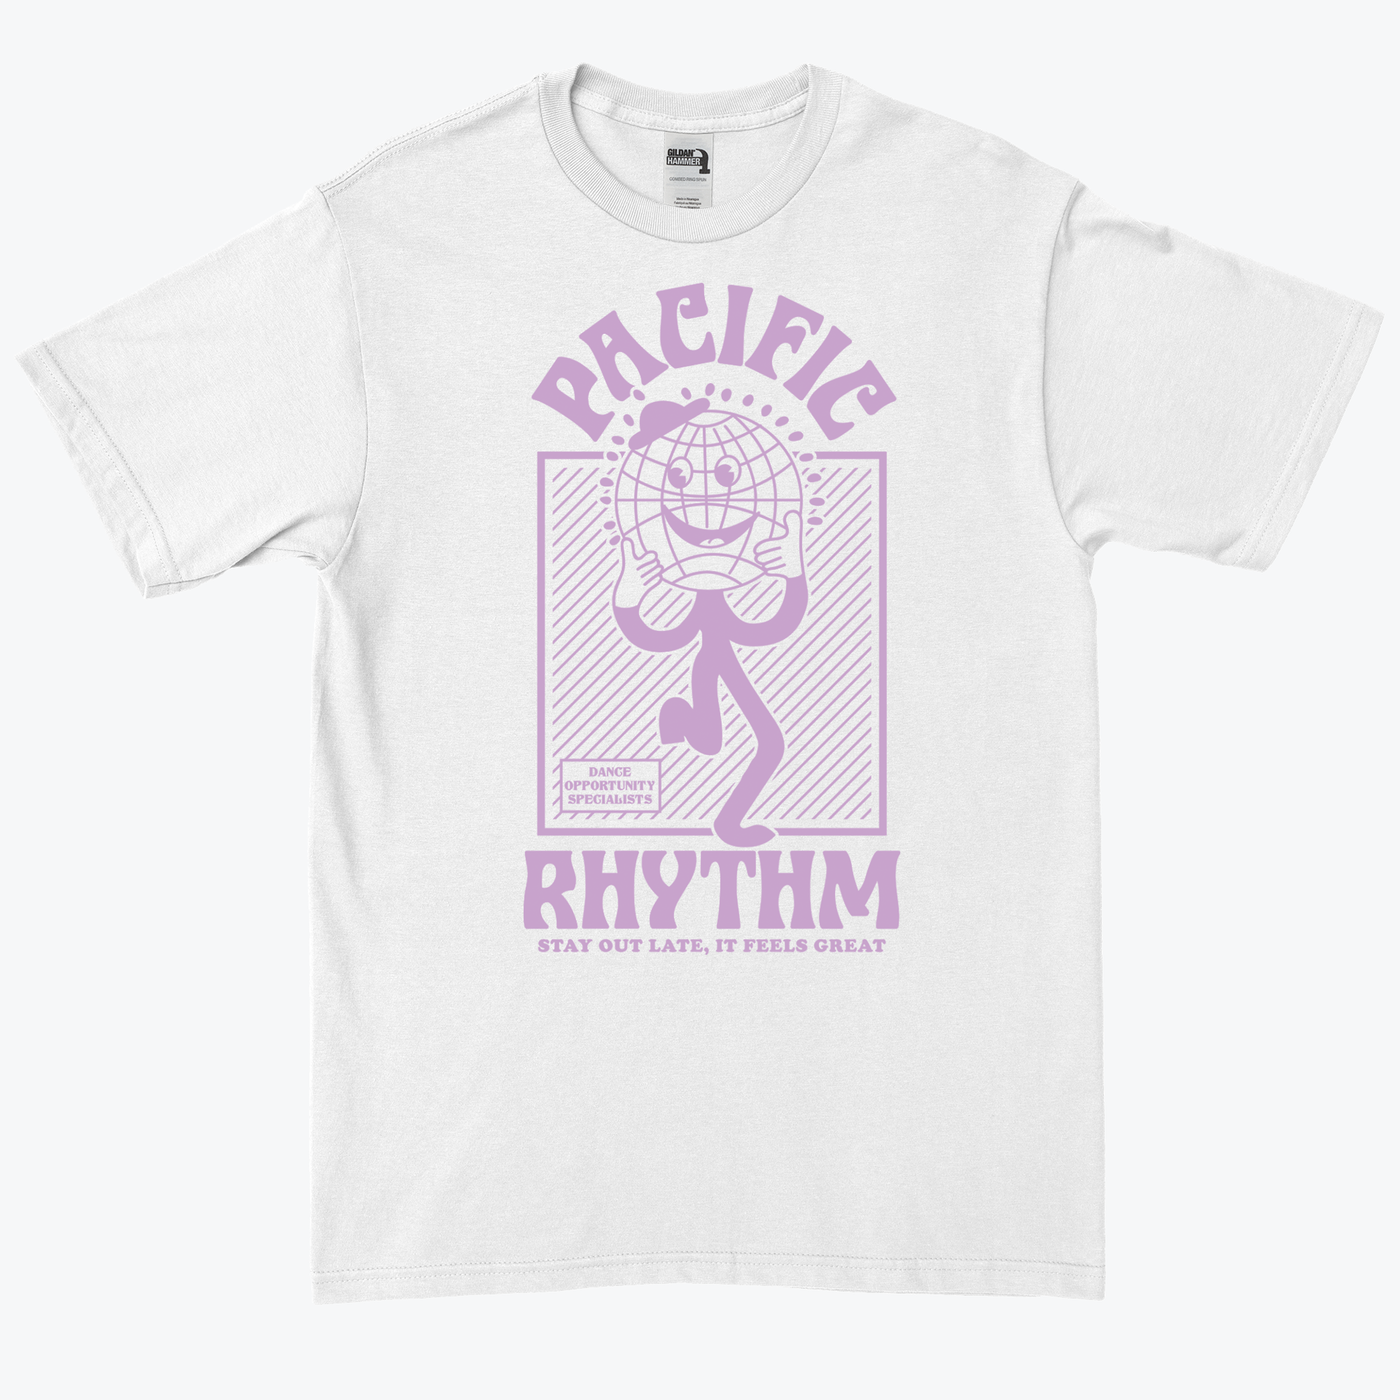 Pacific Rhythm x Rhek collaboration T-shirt